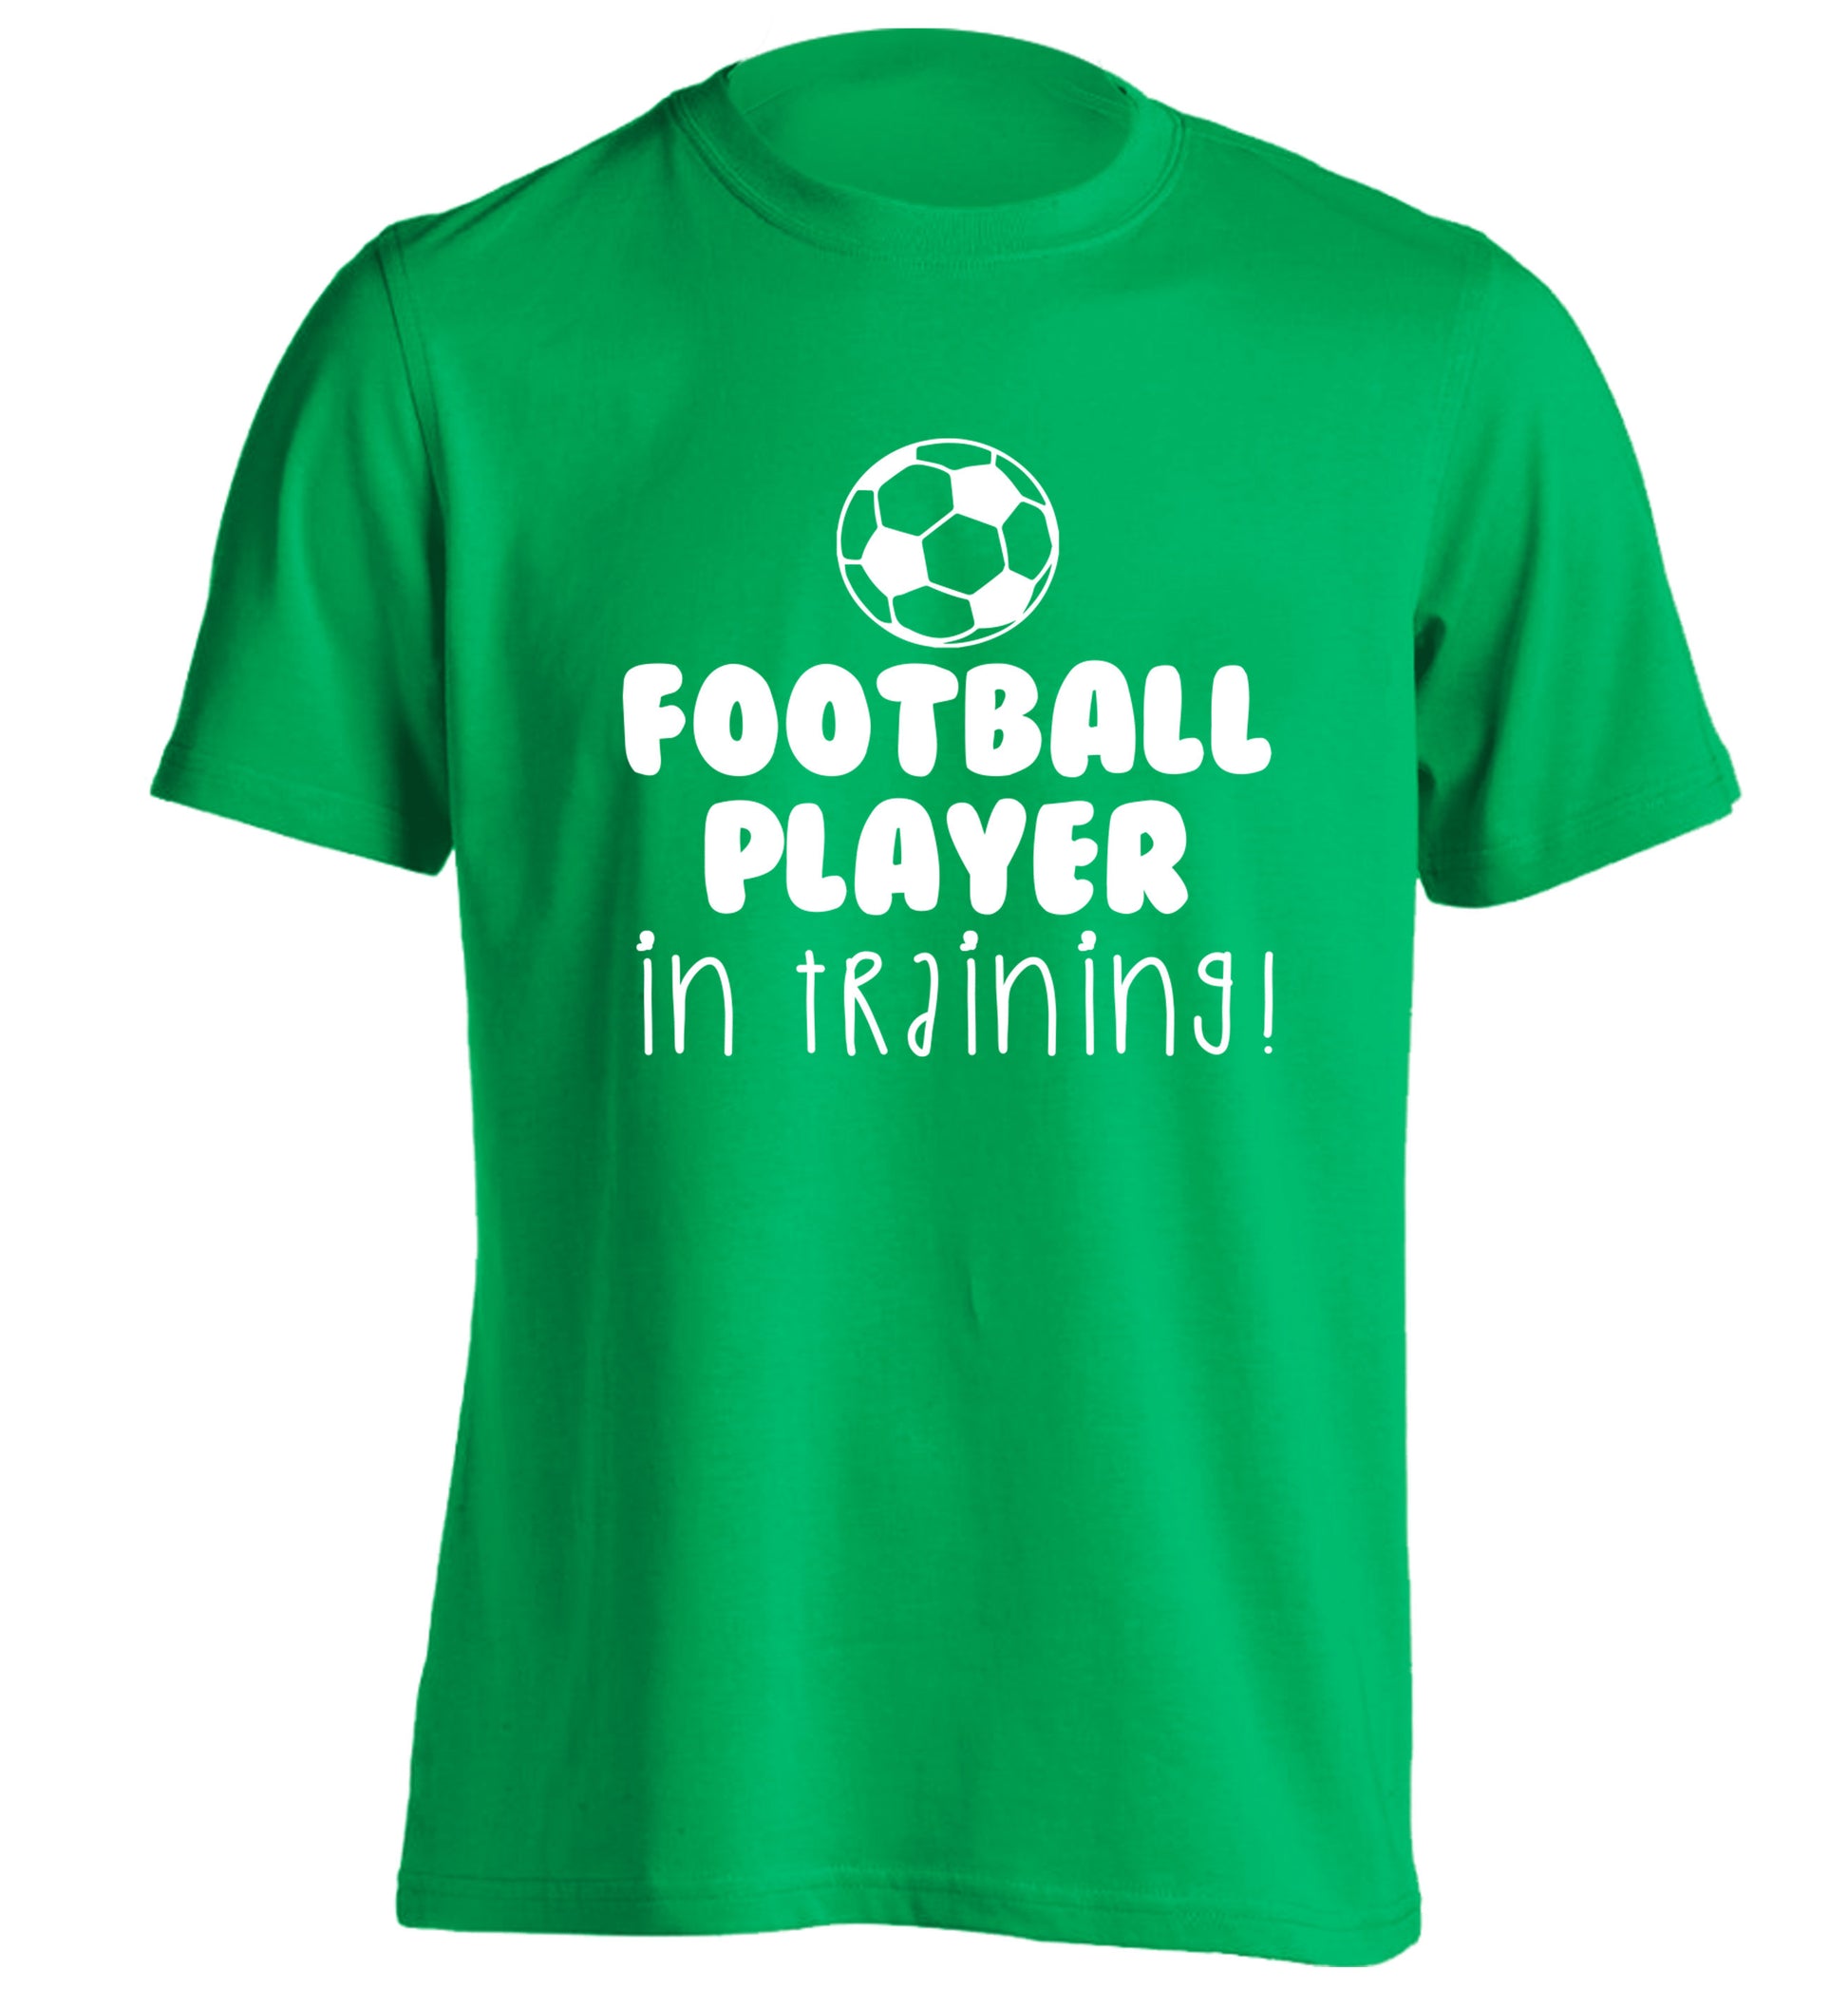 Football player in training adults unisex green Tshirt 2XL